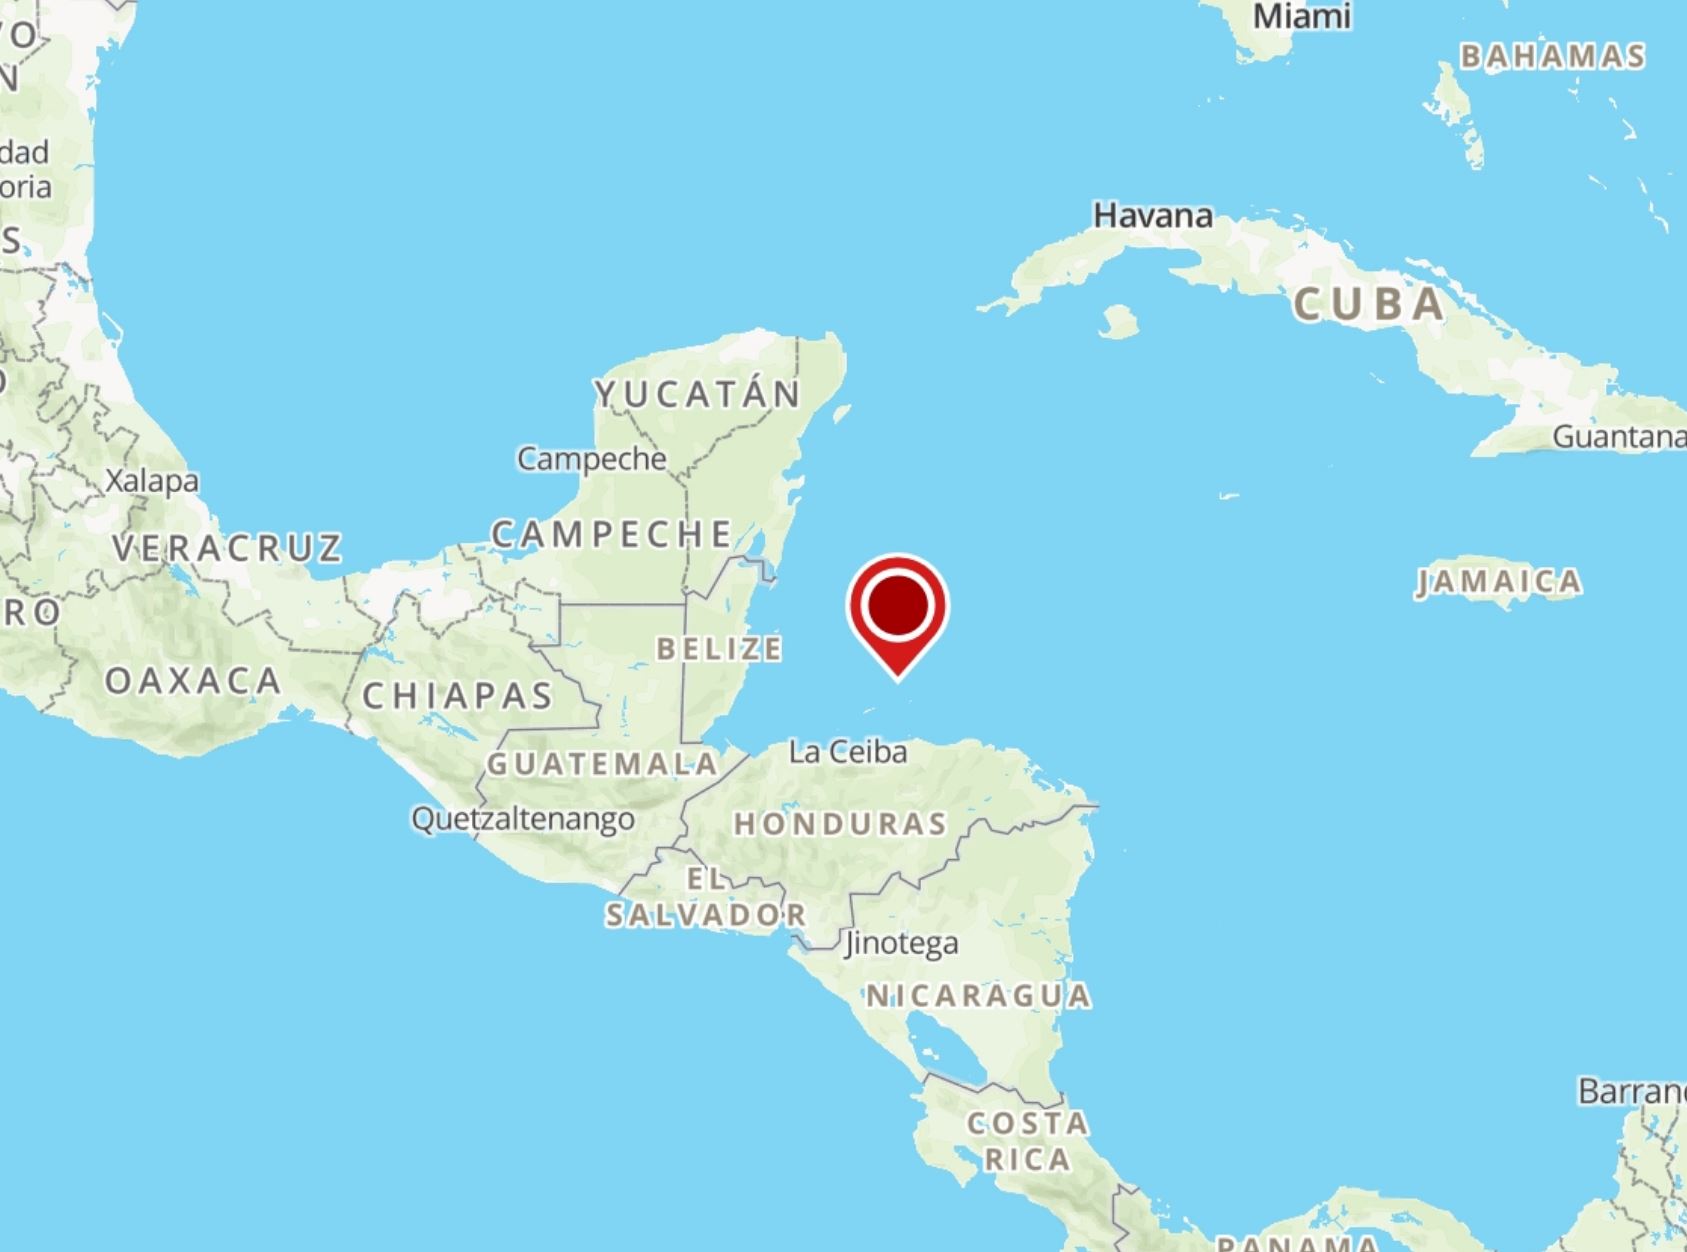 Sismo de 4.7 grados en la escala de Richter sacude la zona insular de Honduras